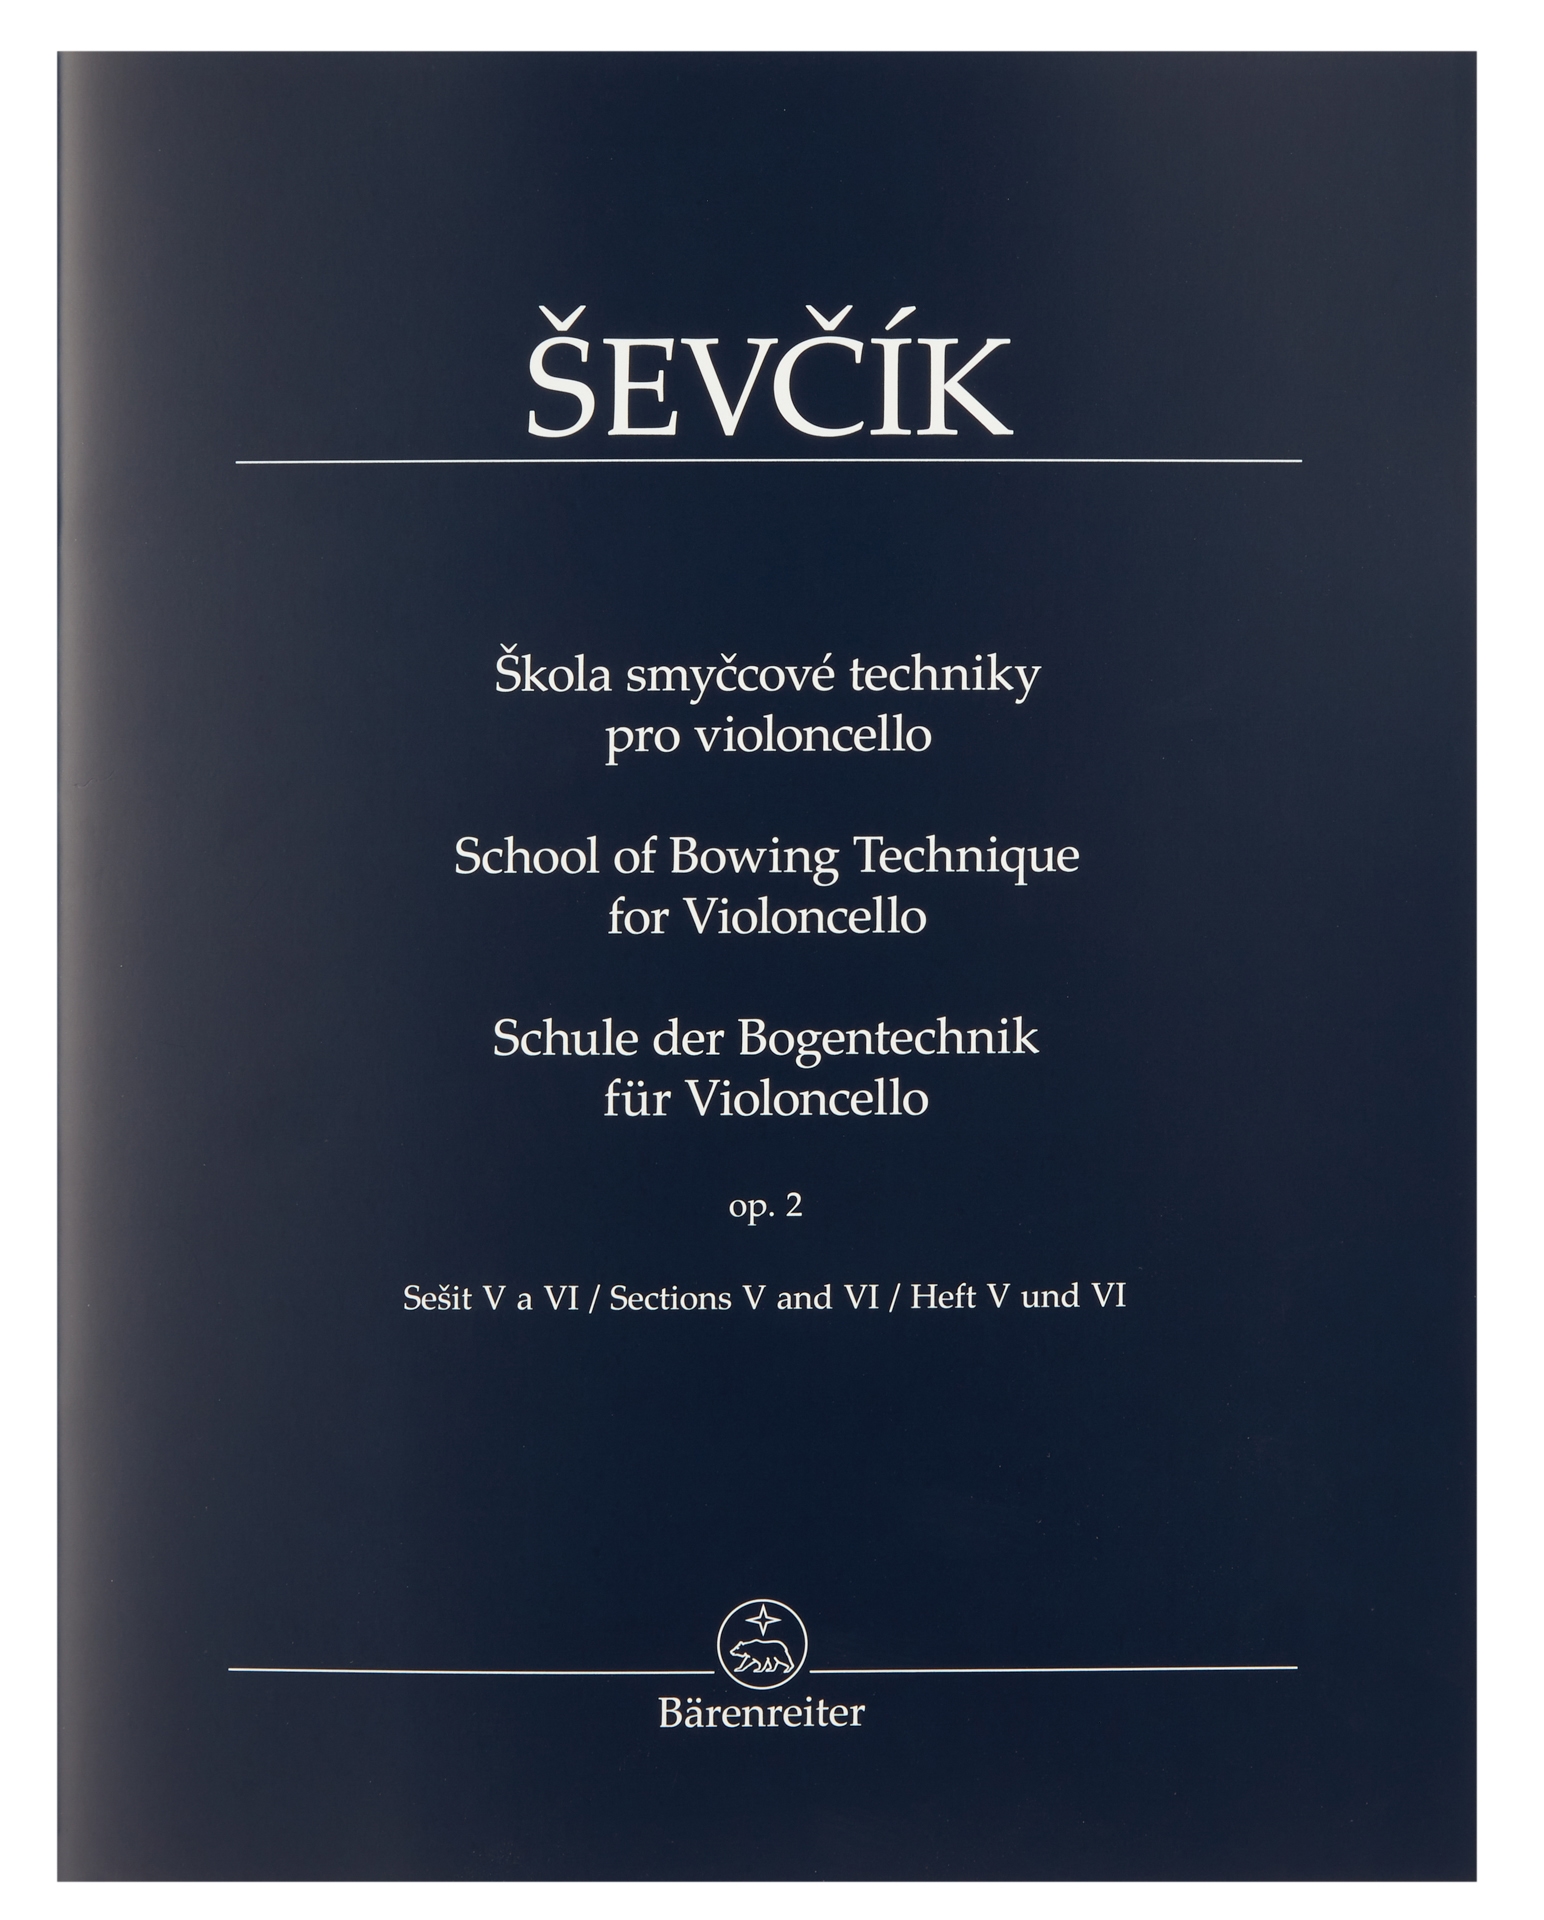 KN Škola smyčcové techniky pro violoncello op. 2, sešit V a VI - Otakar Ševčík